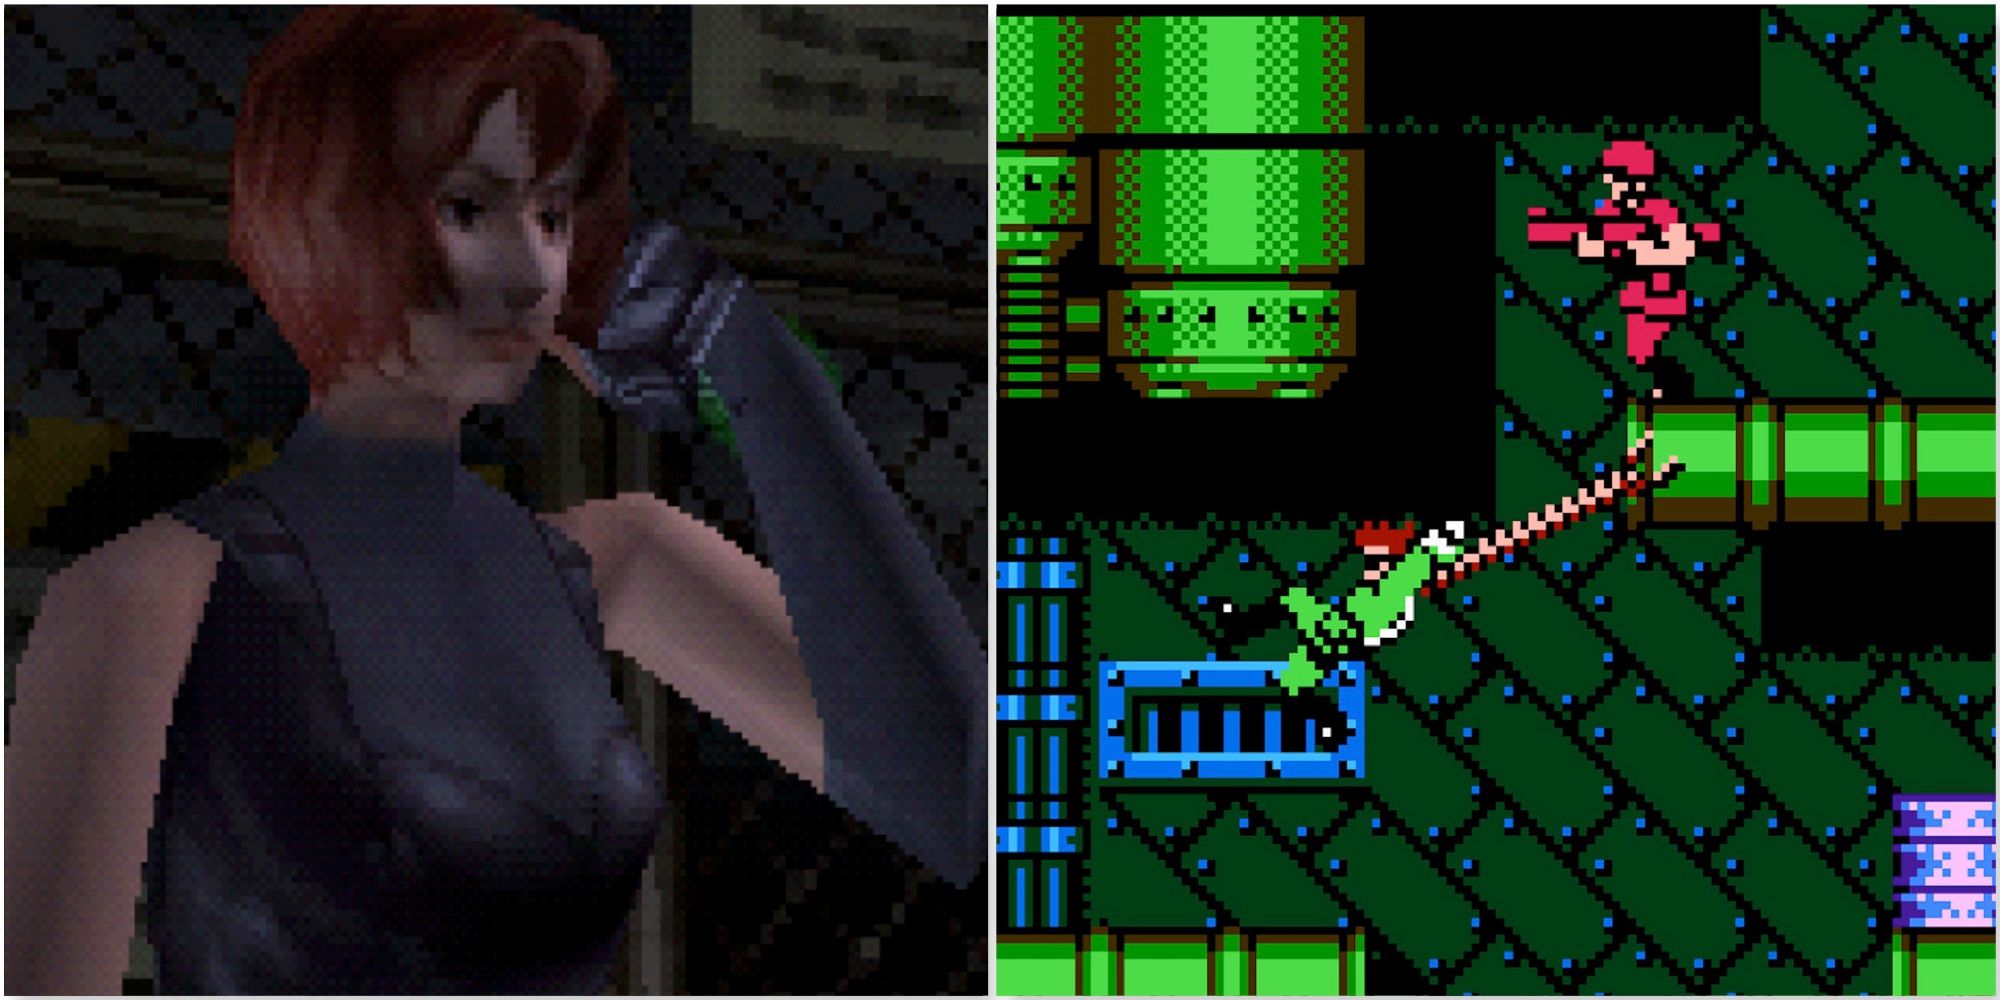 Regina in Dino Crisis and Swinging around in Bionic Commando